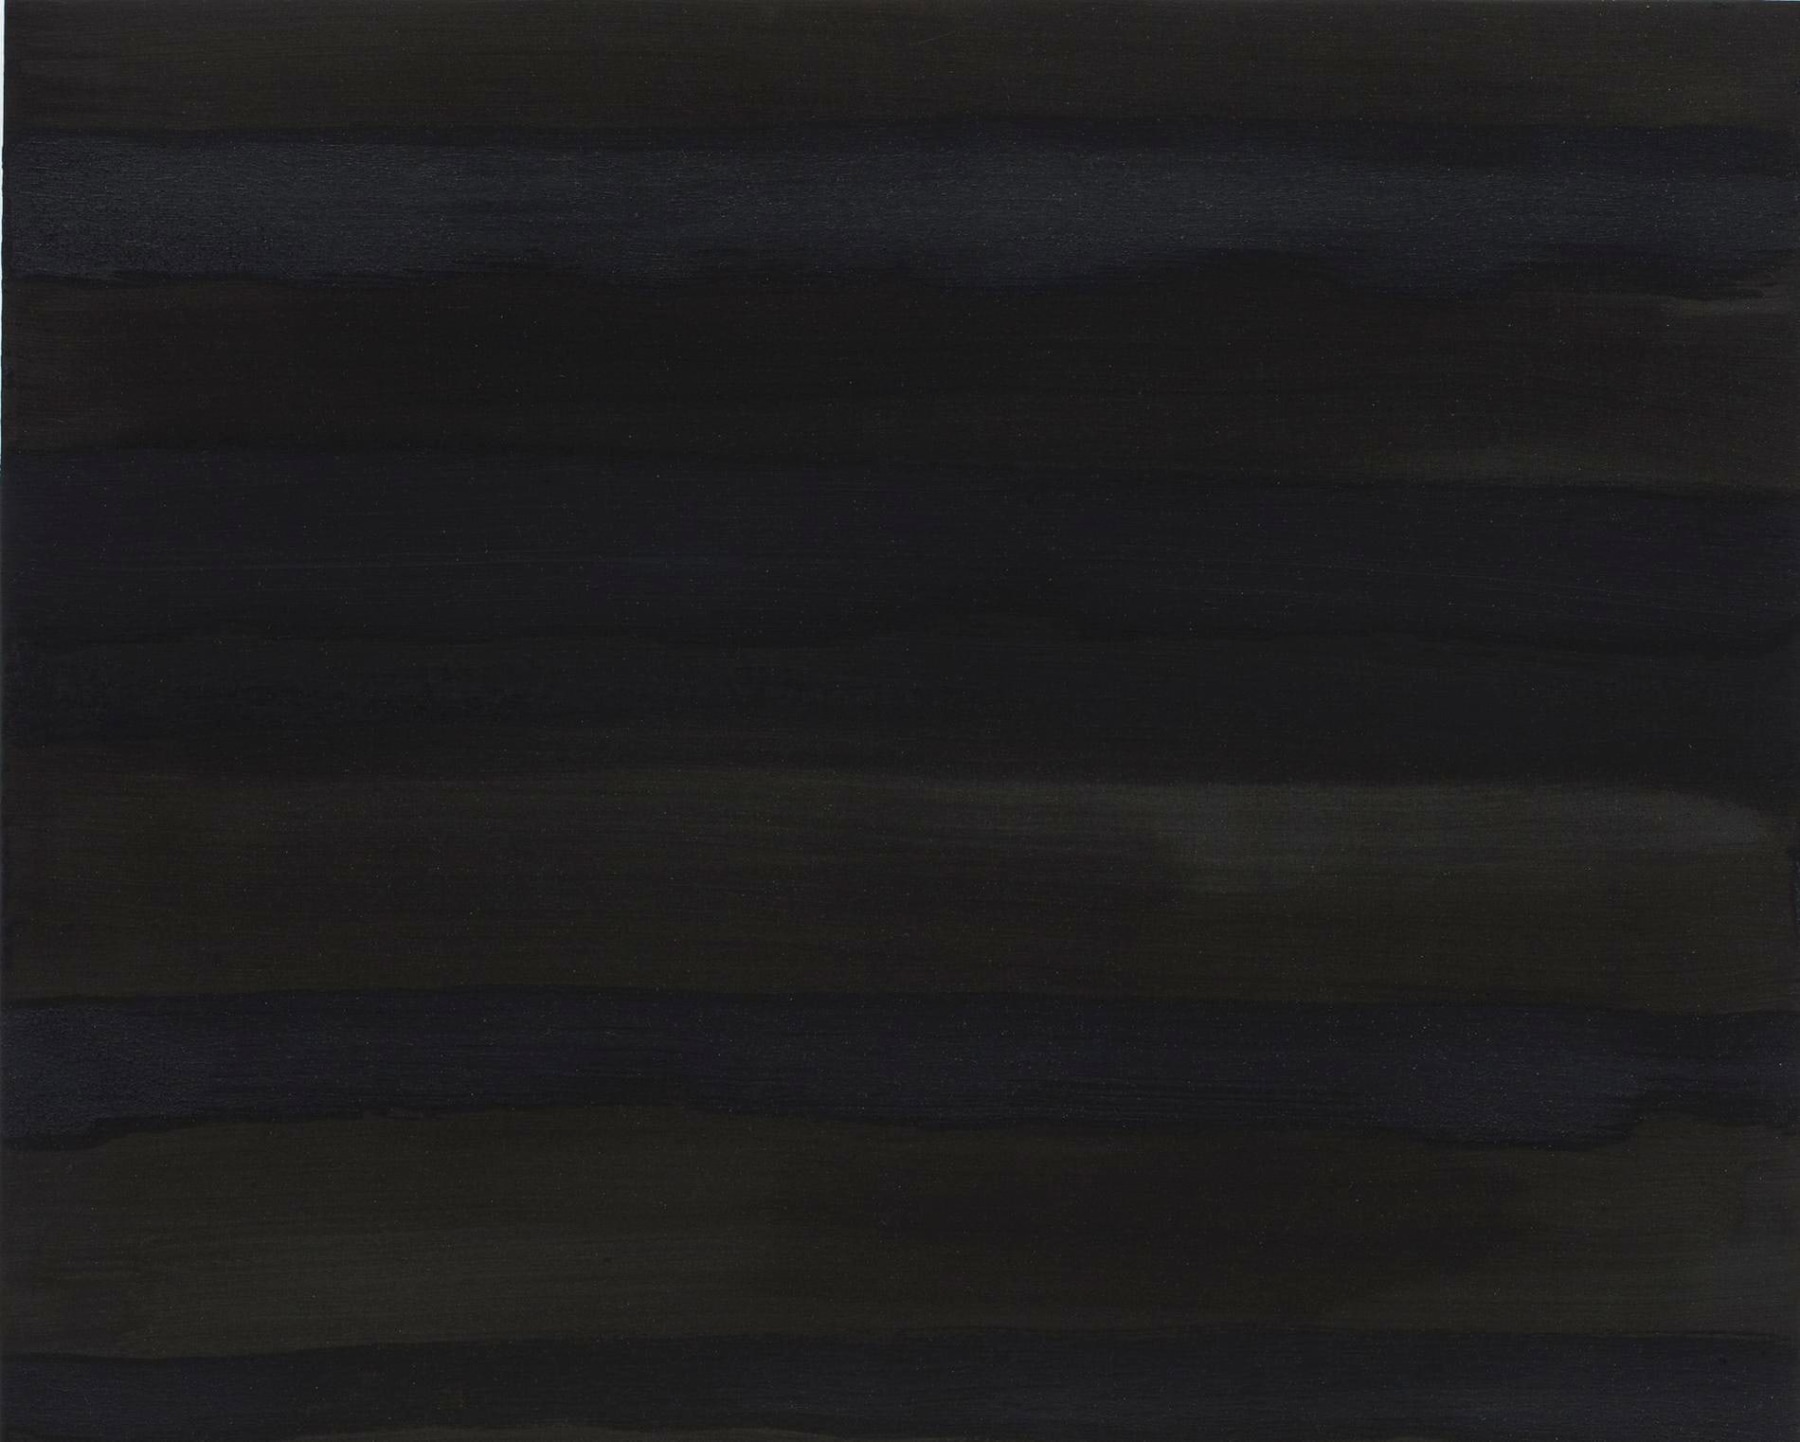 Abstract painting with longitudinal streaks of dark hues